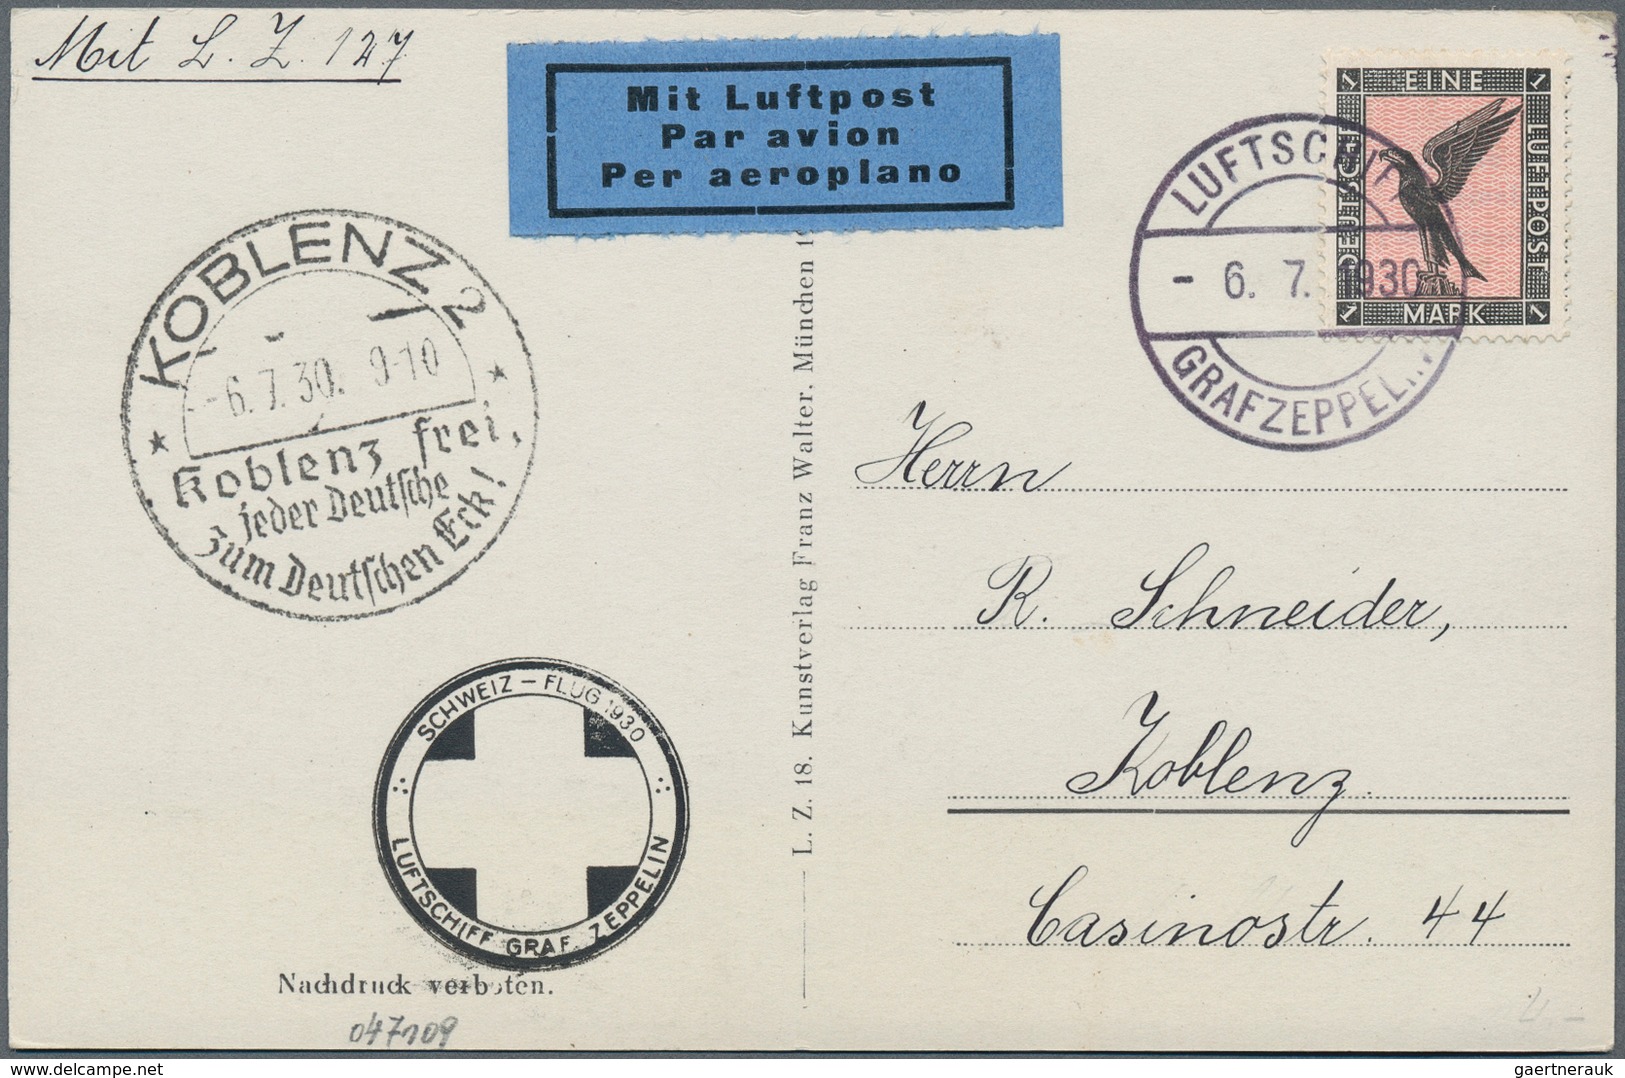 Zeppelinpost Deutschland: Collection of over 120 Zeppelin items with dozens of flown covers includin